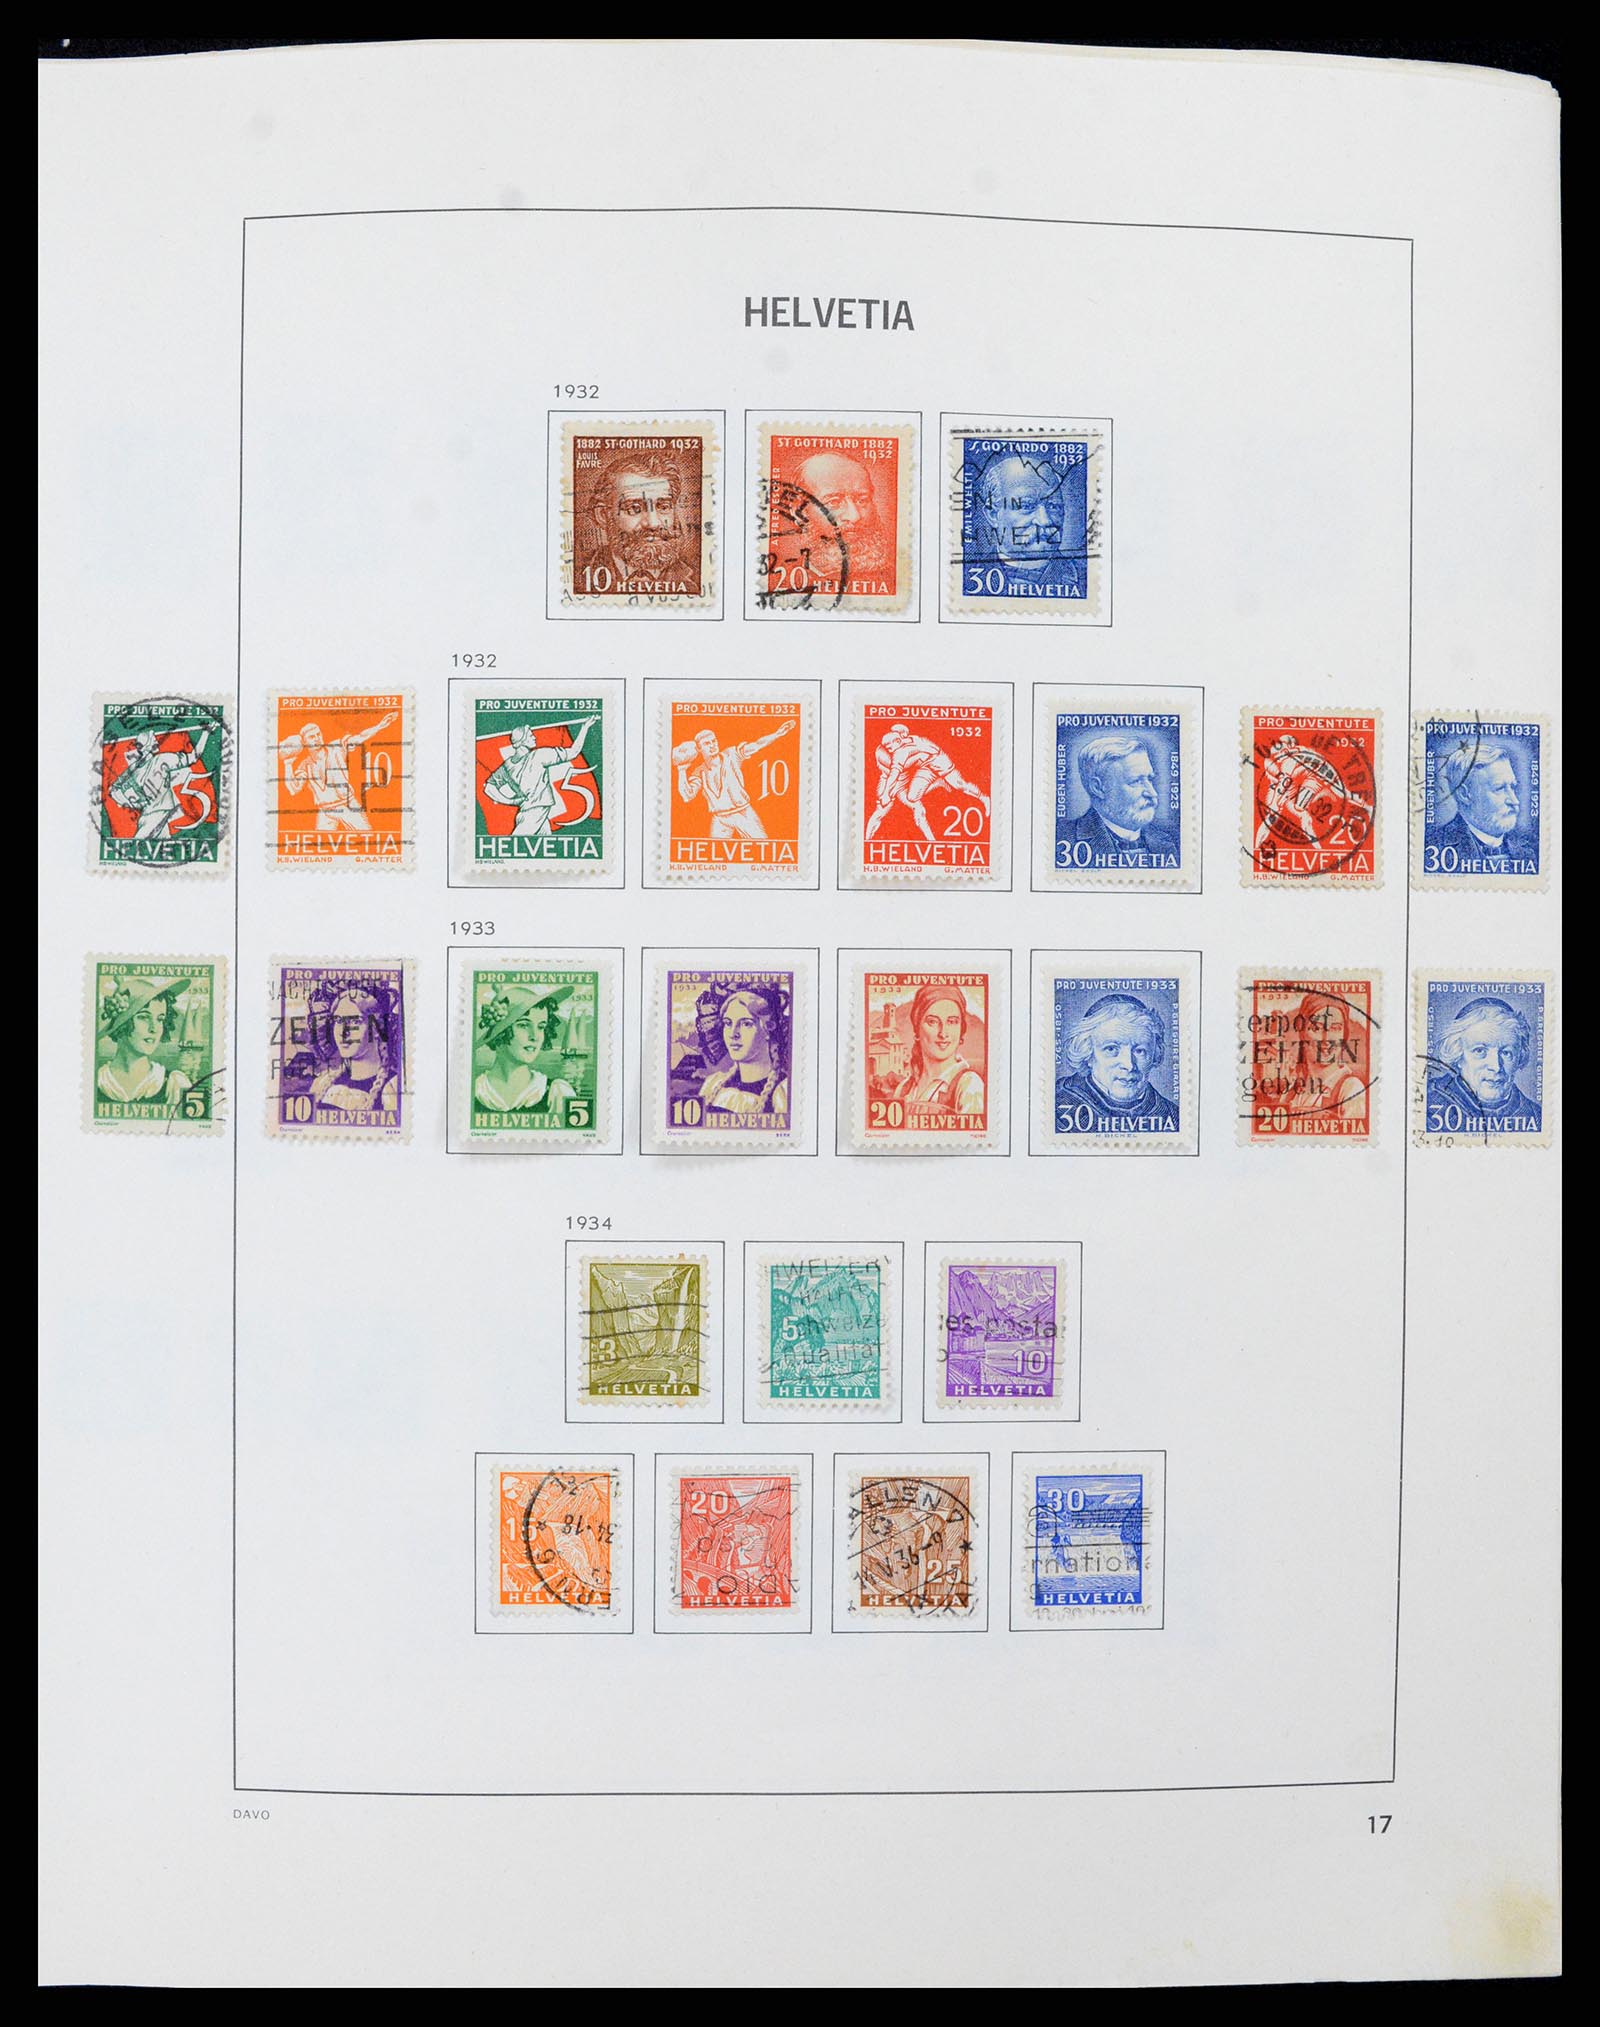 37496 016 - Stamp collection 37496 Switzerland 1854-2002.